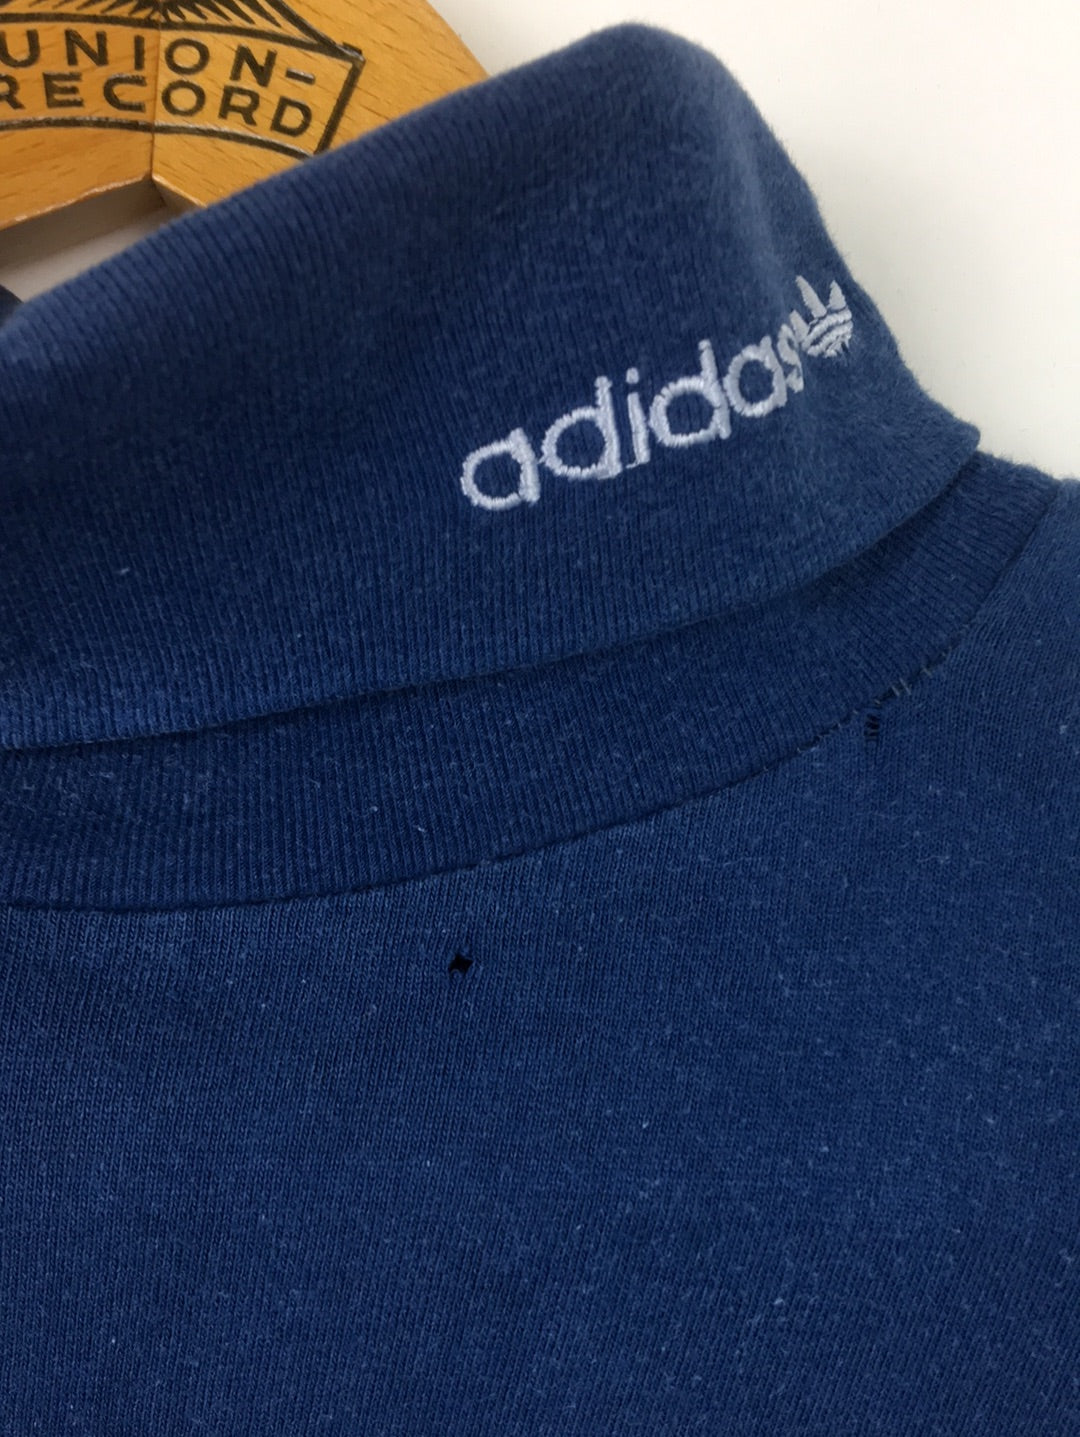 Adidas turtleneck sweater (L)